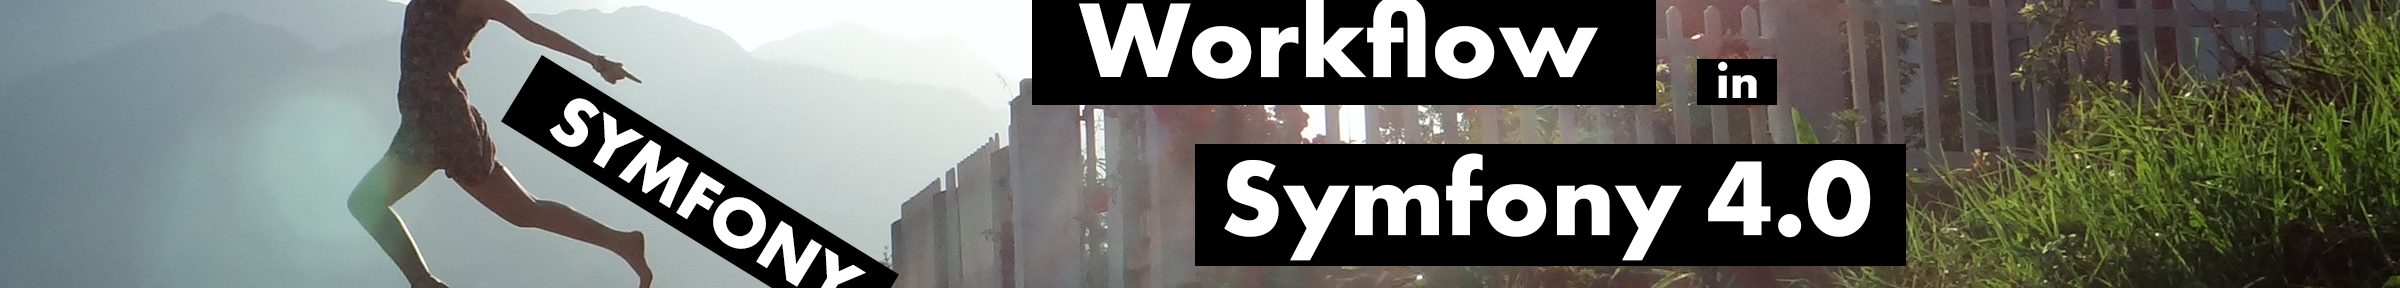 Symfony Flex – der Workflow für Symfony 4.0